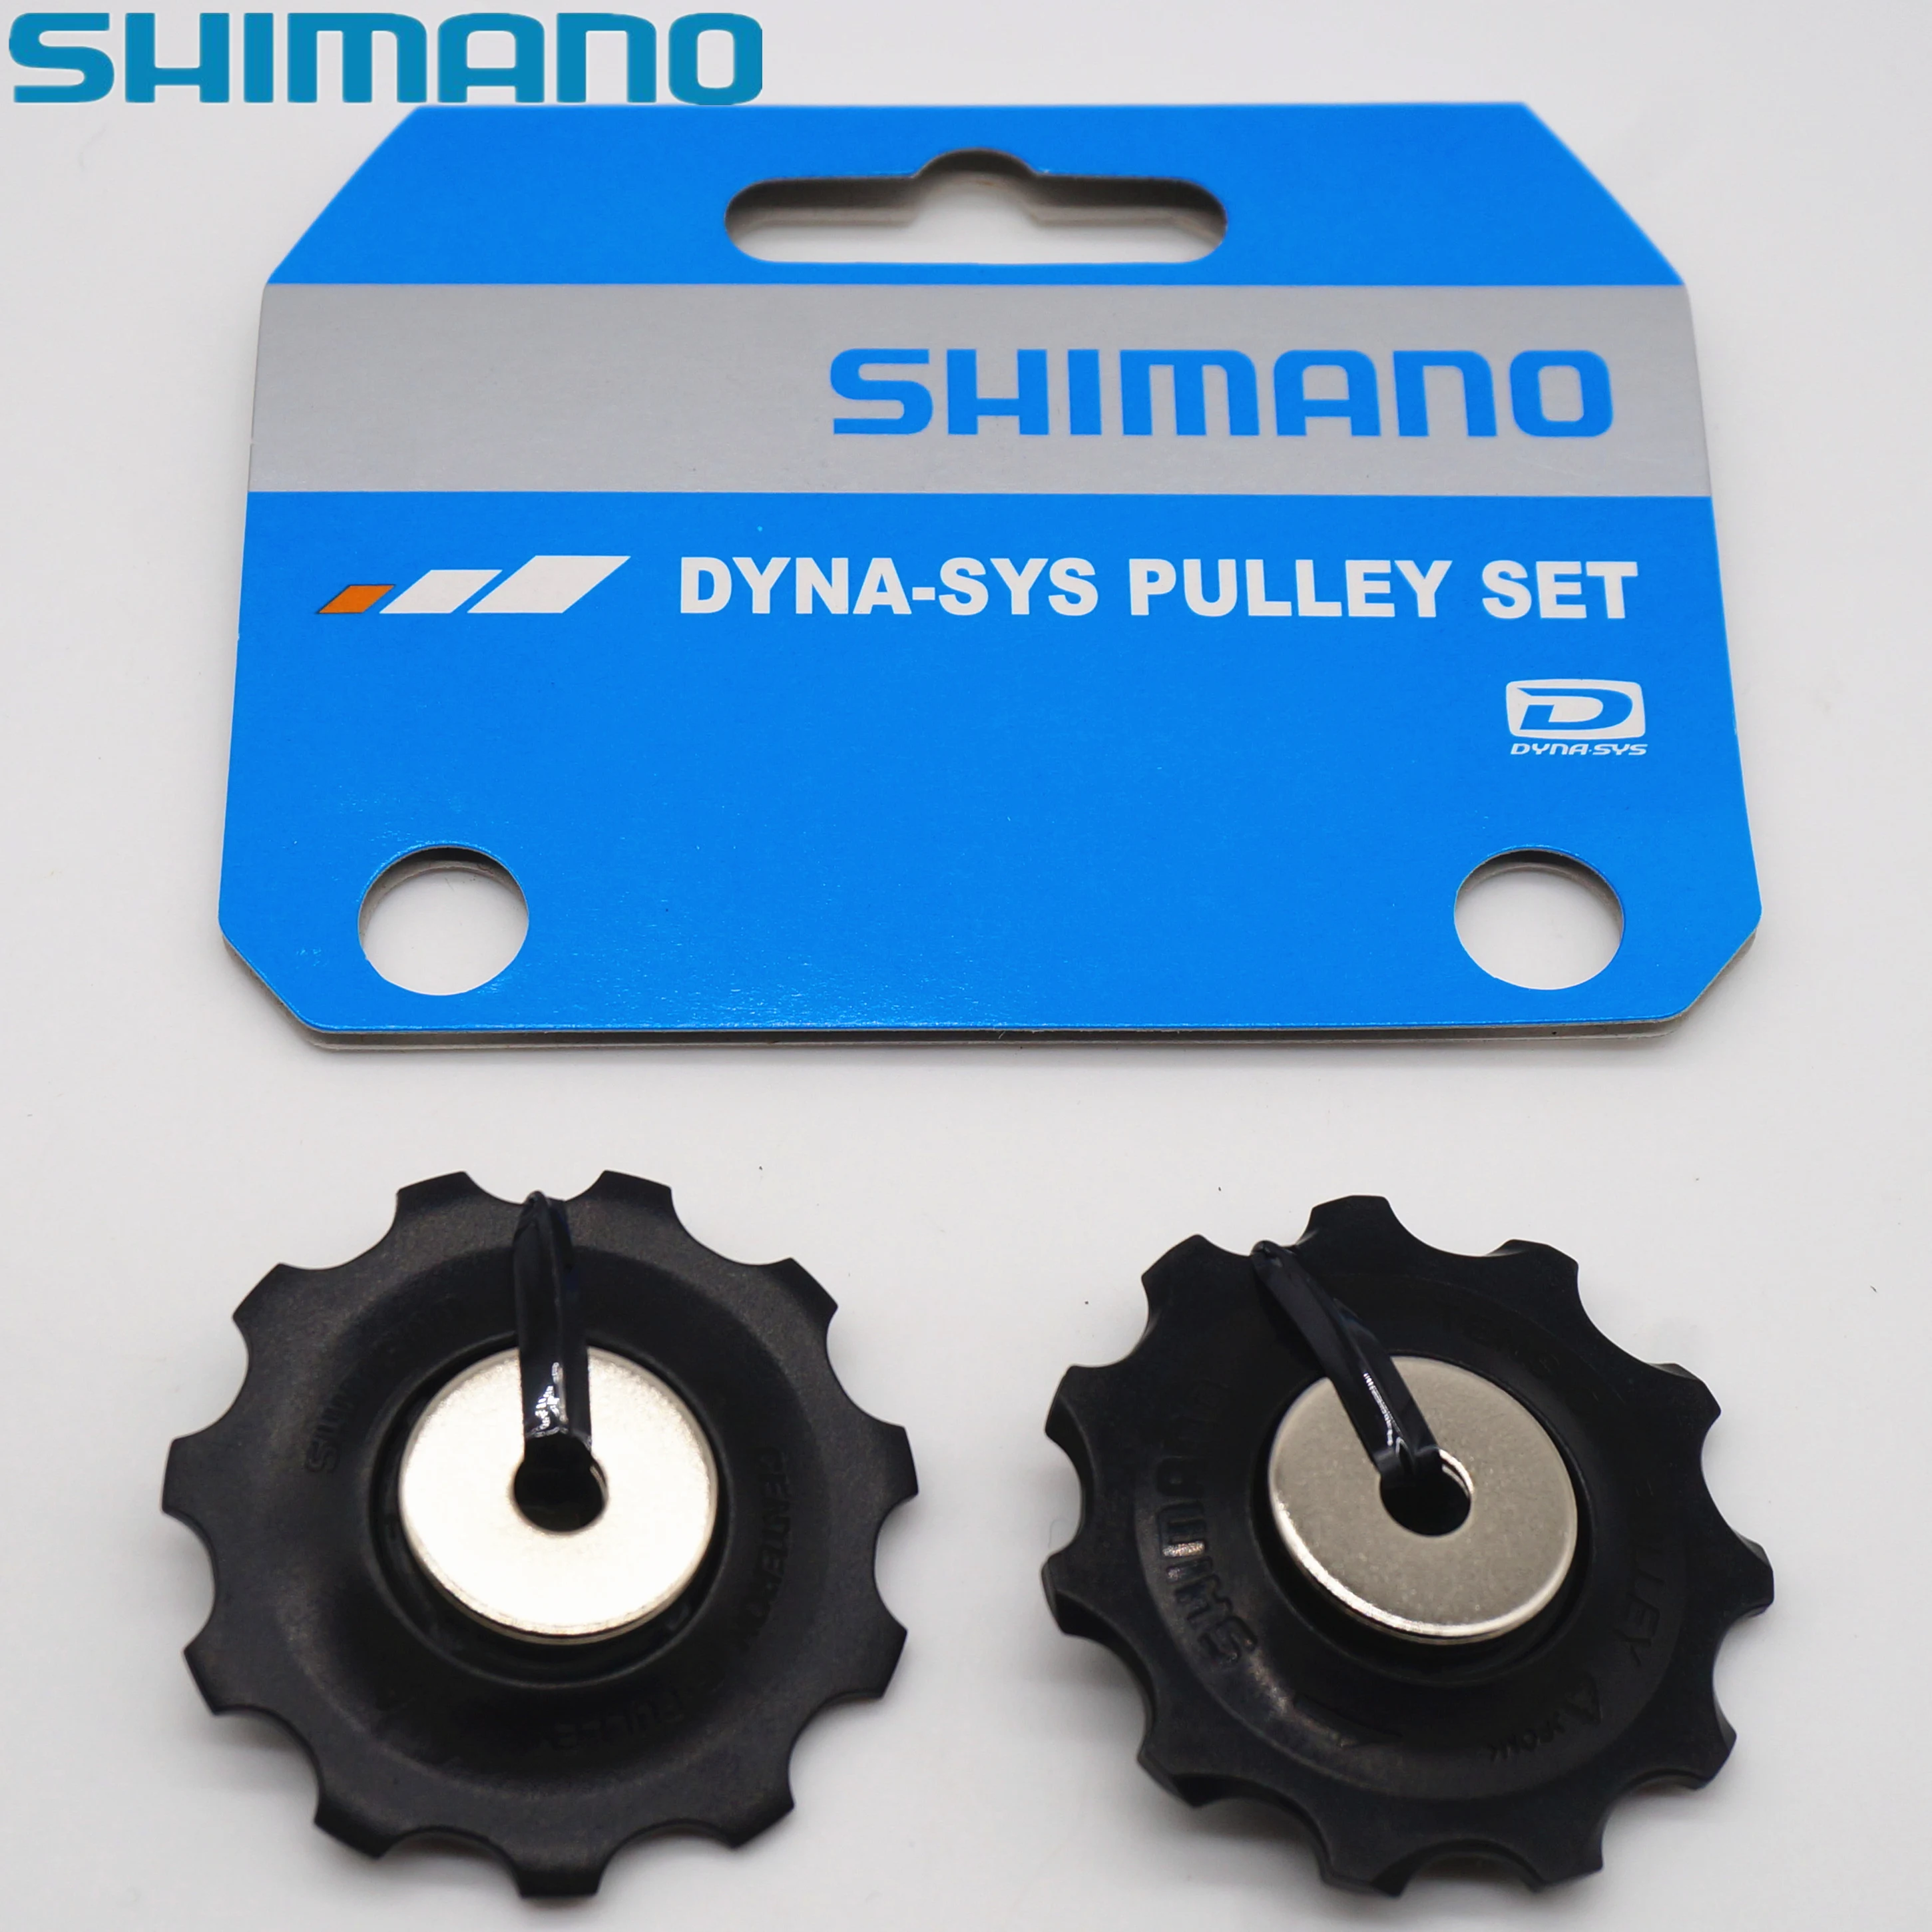 

Original Shimano 5800/RD-M7000-10/M675/M670/M663/M640/M615/M610/M593 Bike Pulley set Rear Derailleur Guide Roller tension pulley